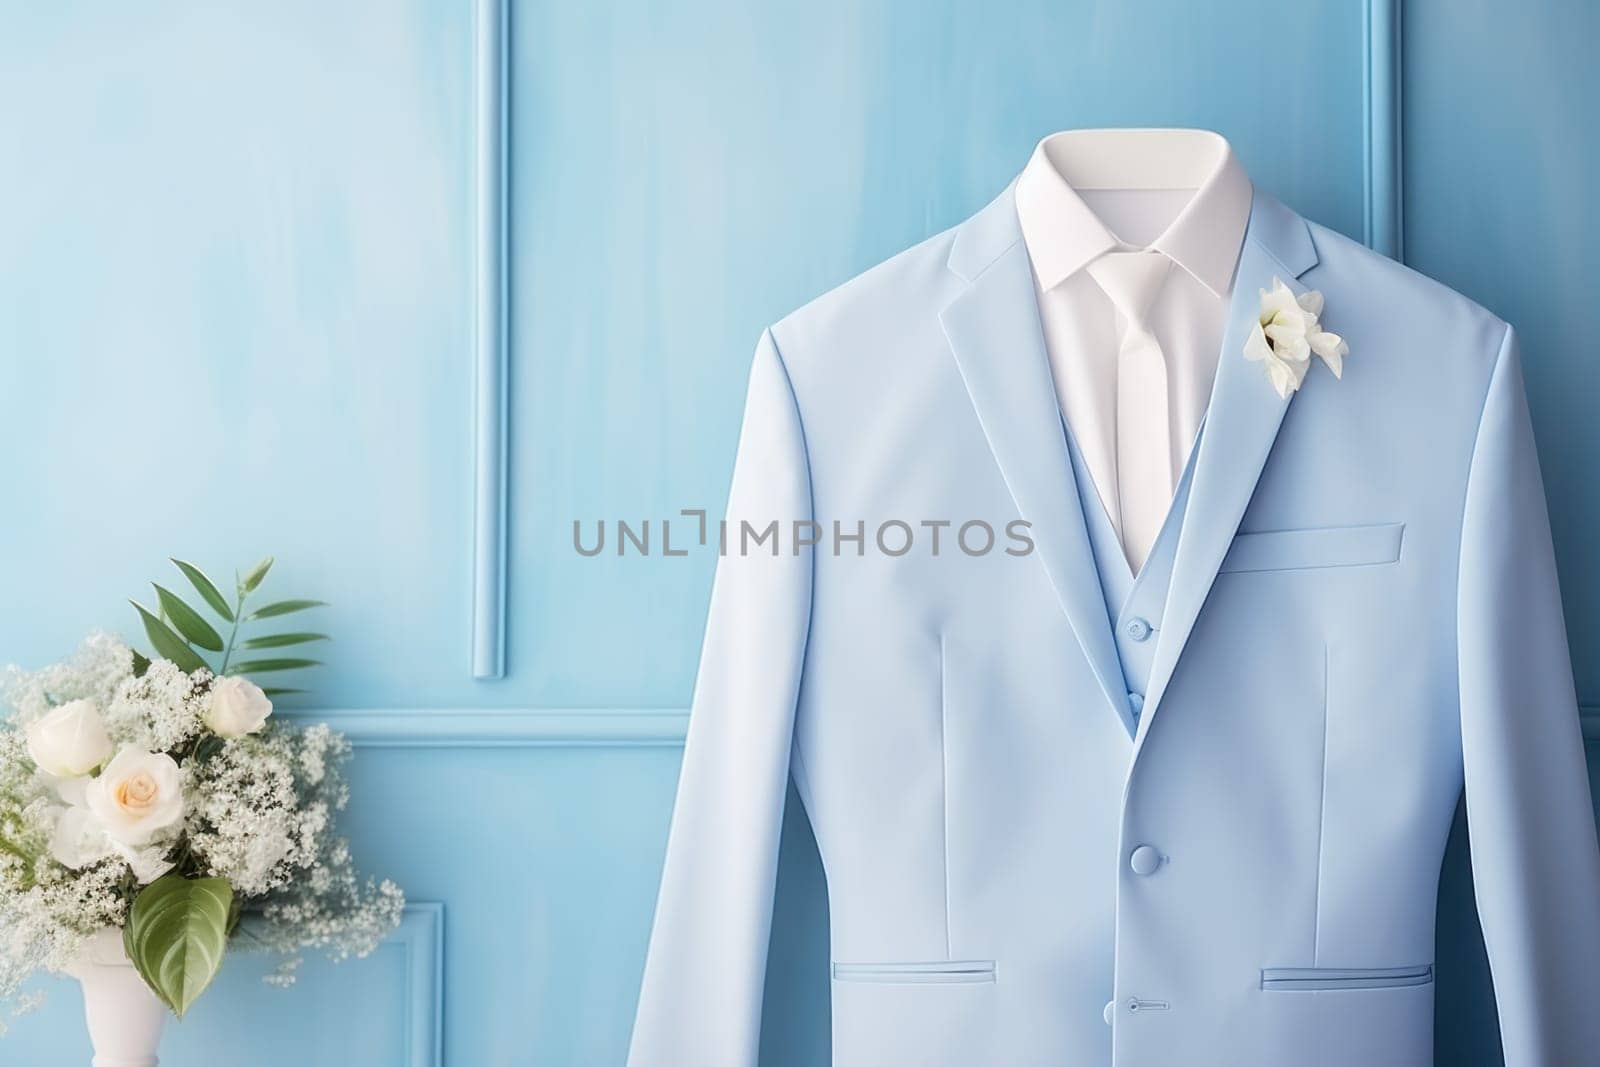 Fashionable Light blue wedding suit. Style detail clothing. Generate Ai